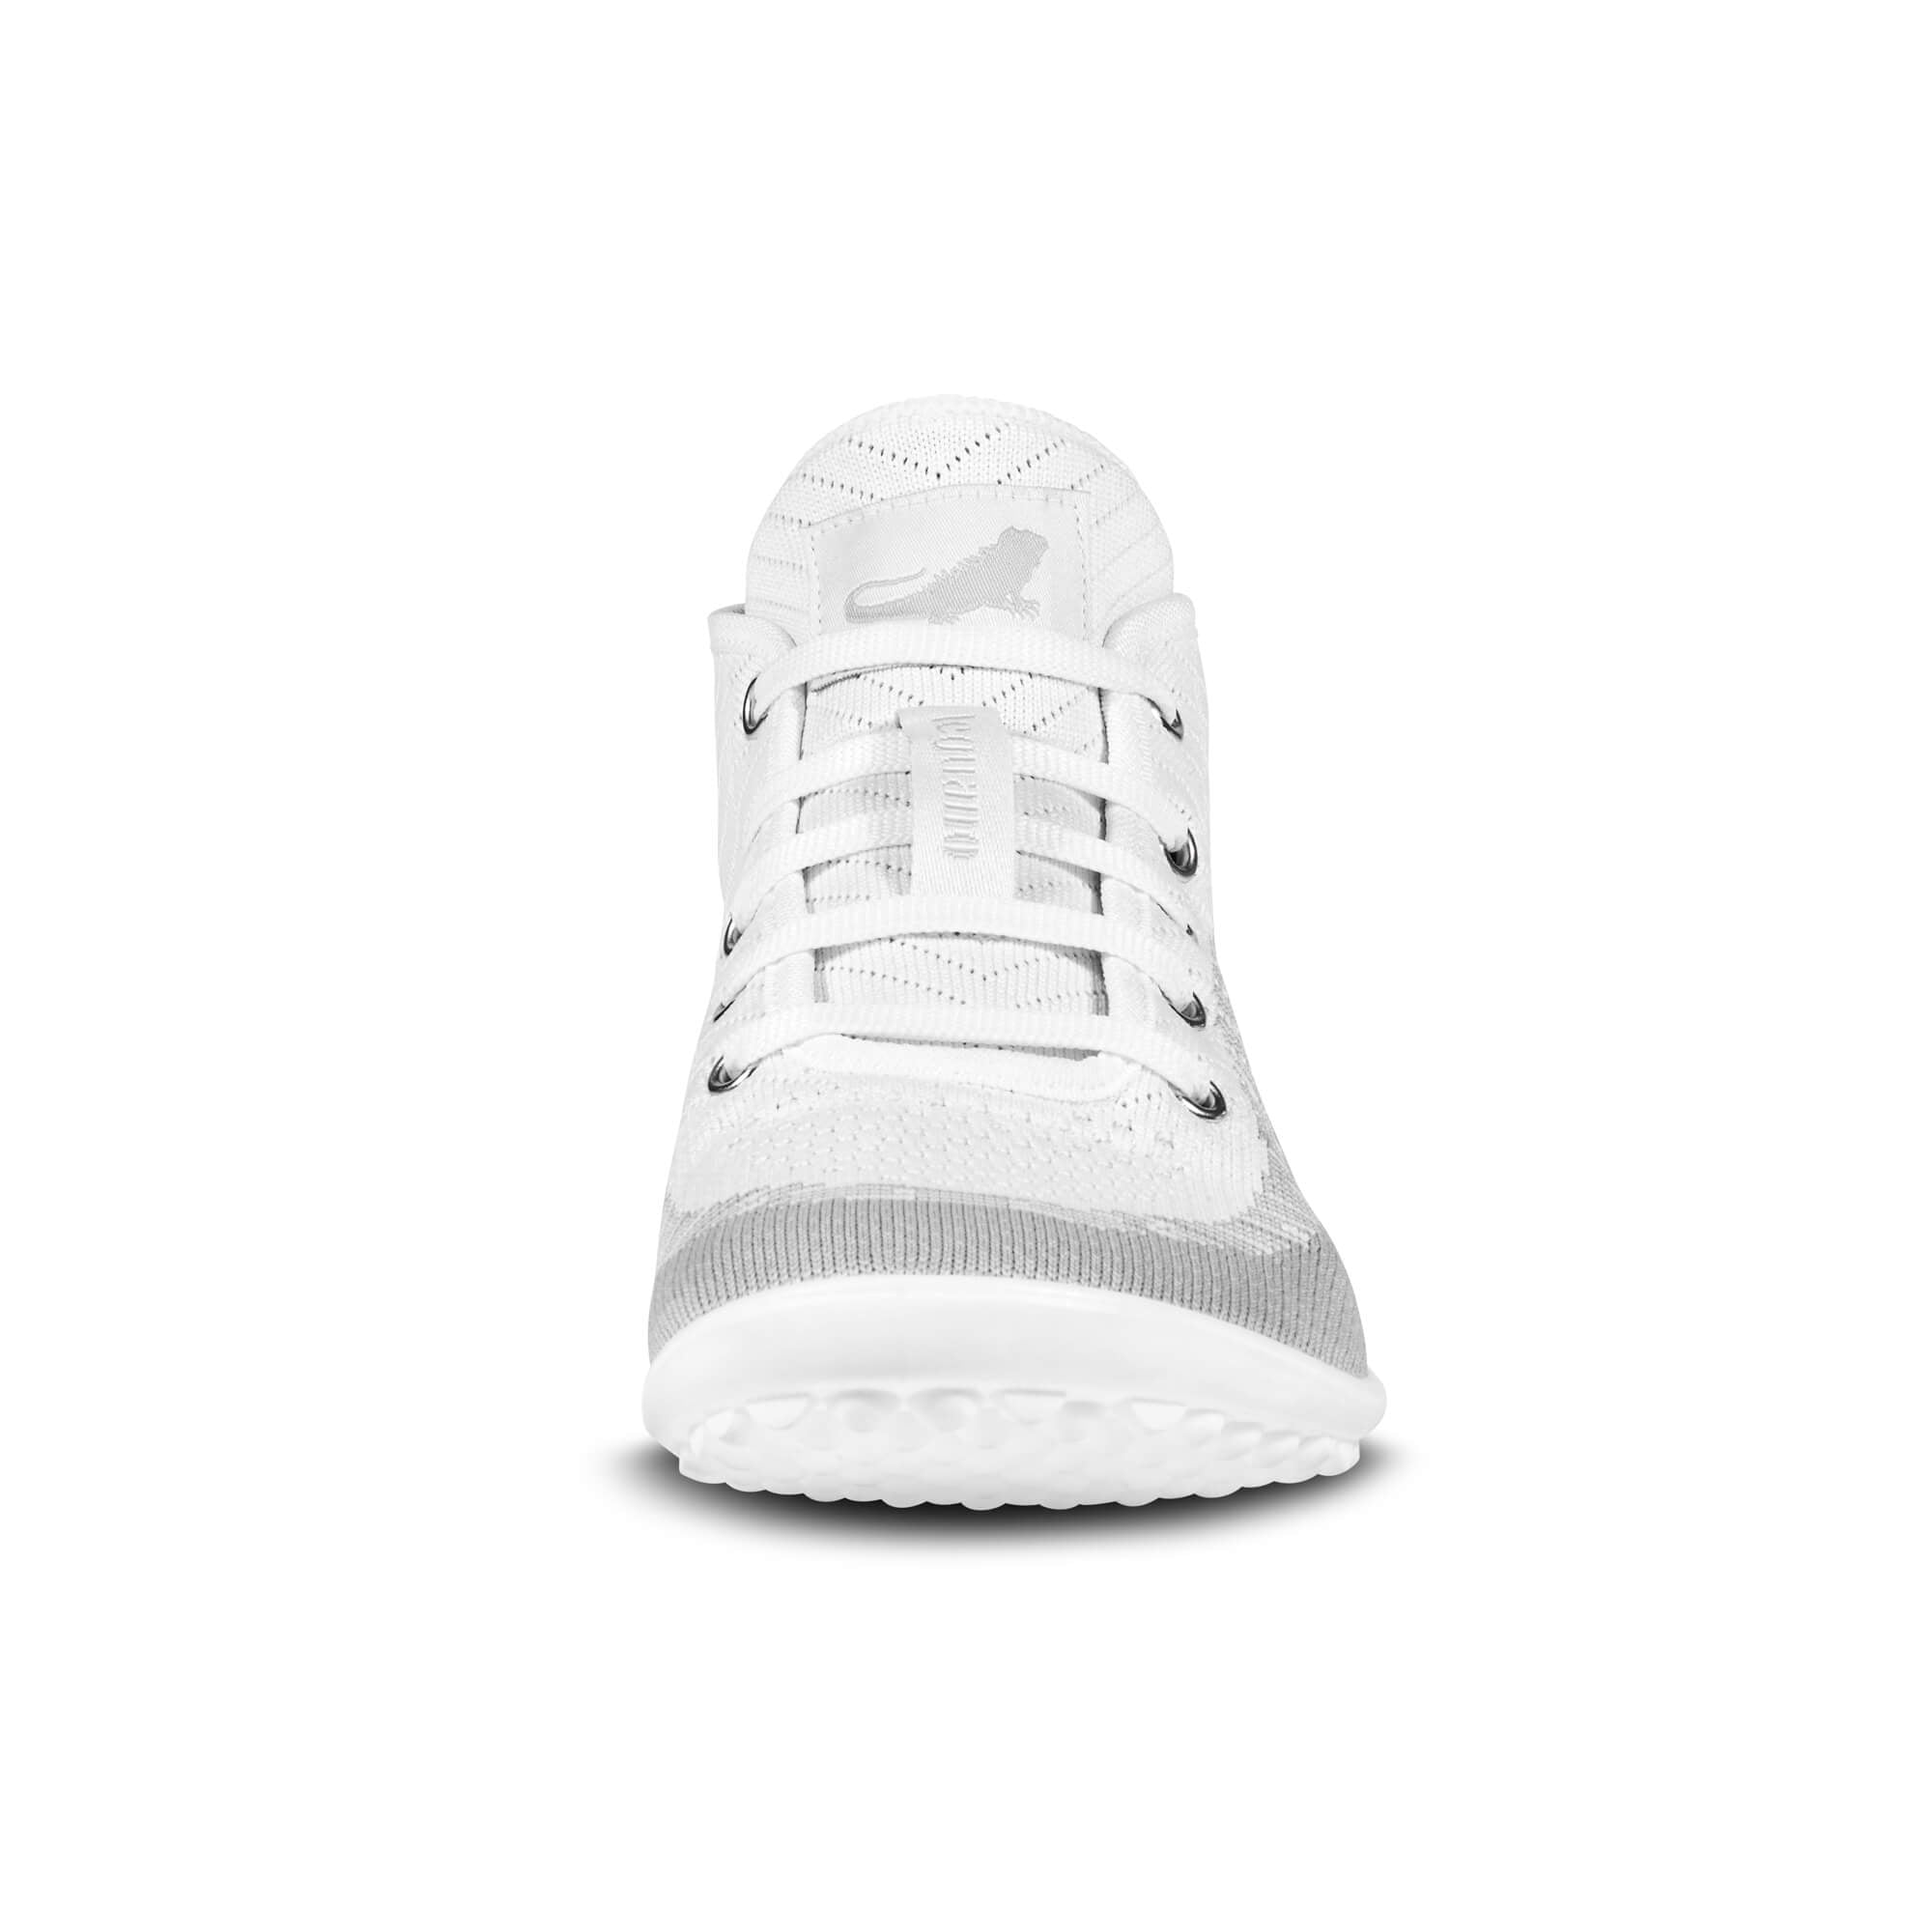 Leguano Stream barfods high ankle sneakers til kvinder og mænd i farven white, forfra